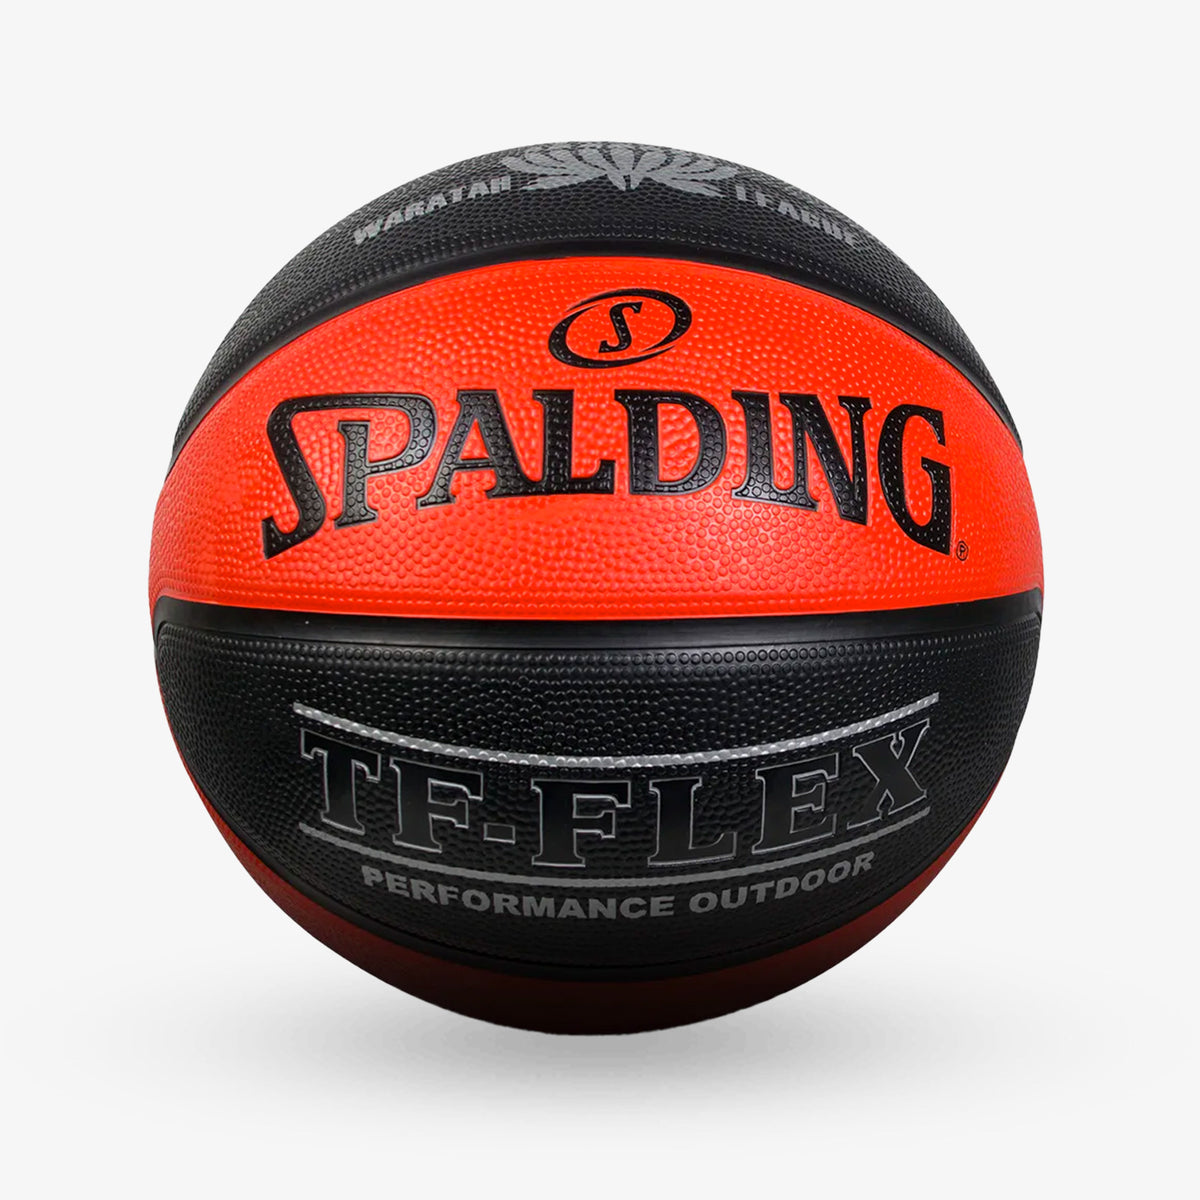 Spalding TF-FLEX Outdoor NSW Basketball - Black/Amber - Size 7